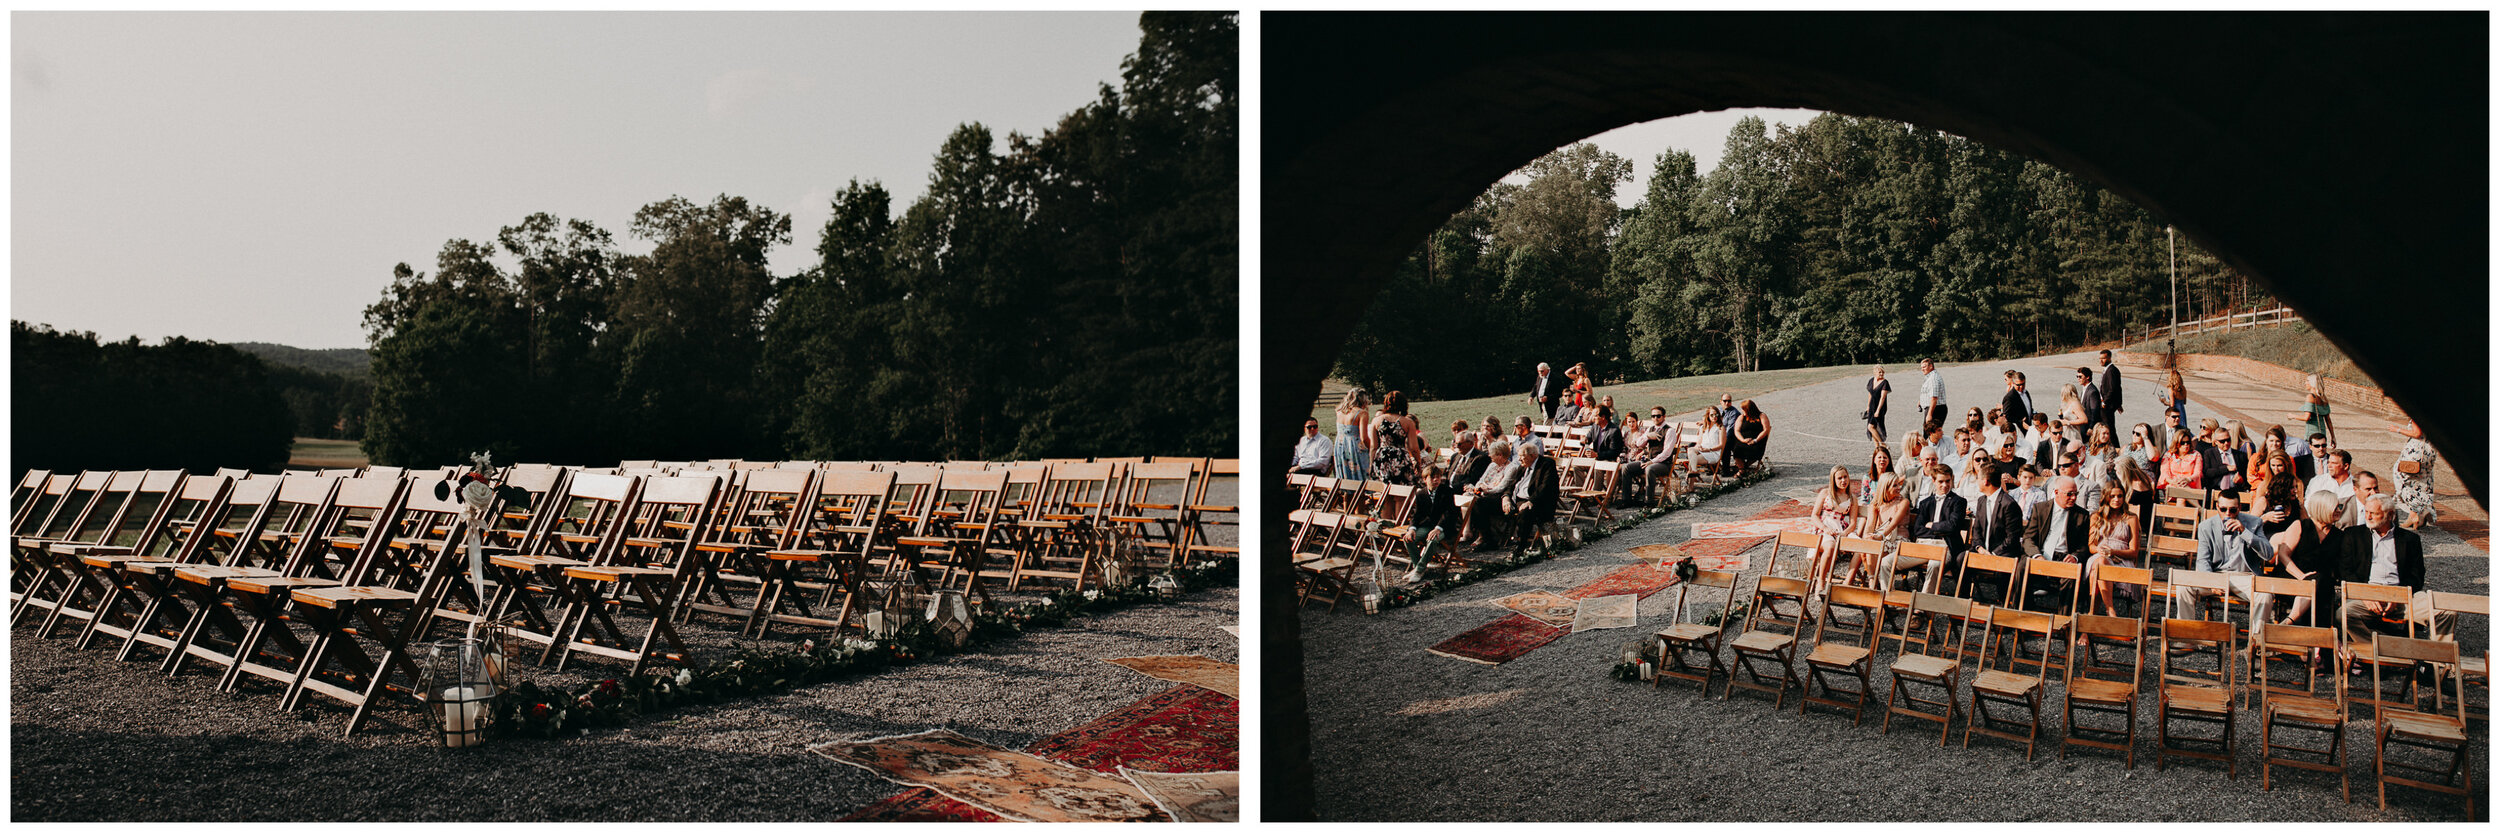 Atlanta_Wedding Day || The Farm at Rome-Ga, Aline Marin Photography63.jpg